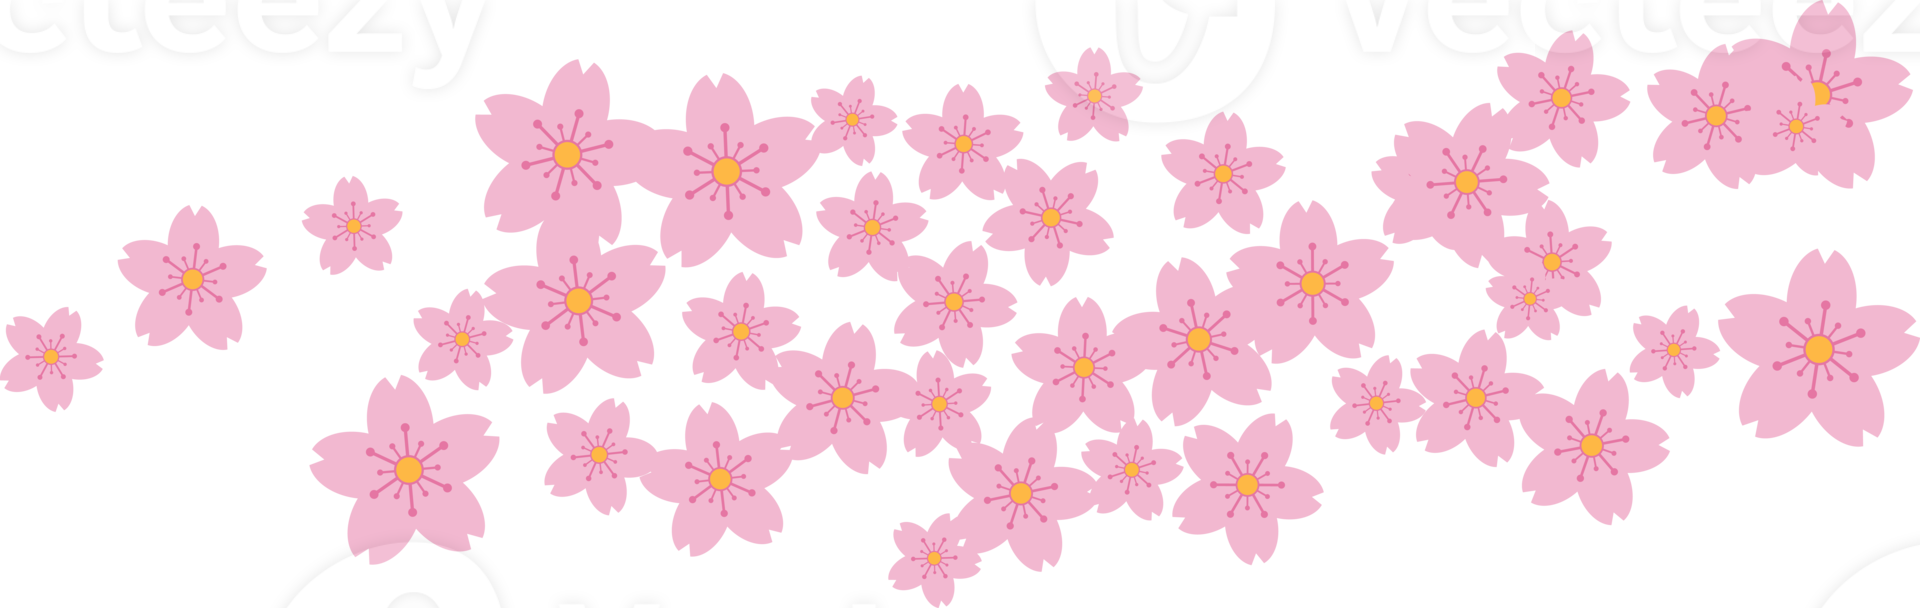 Beautiful pink Sakura Cherry Blossom illustration. png